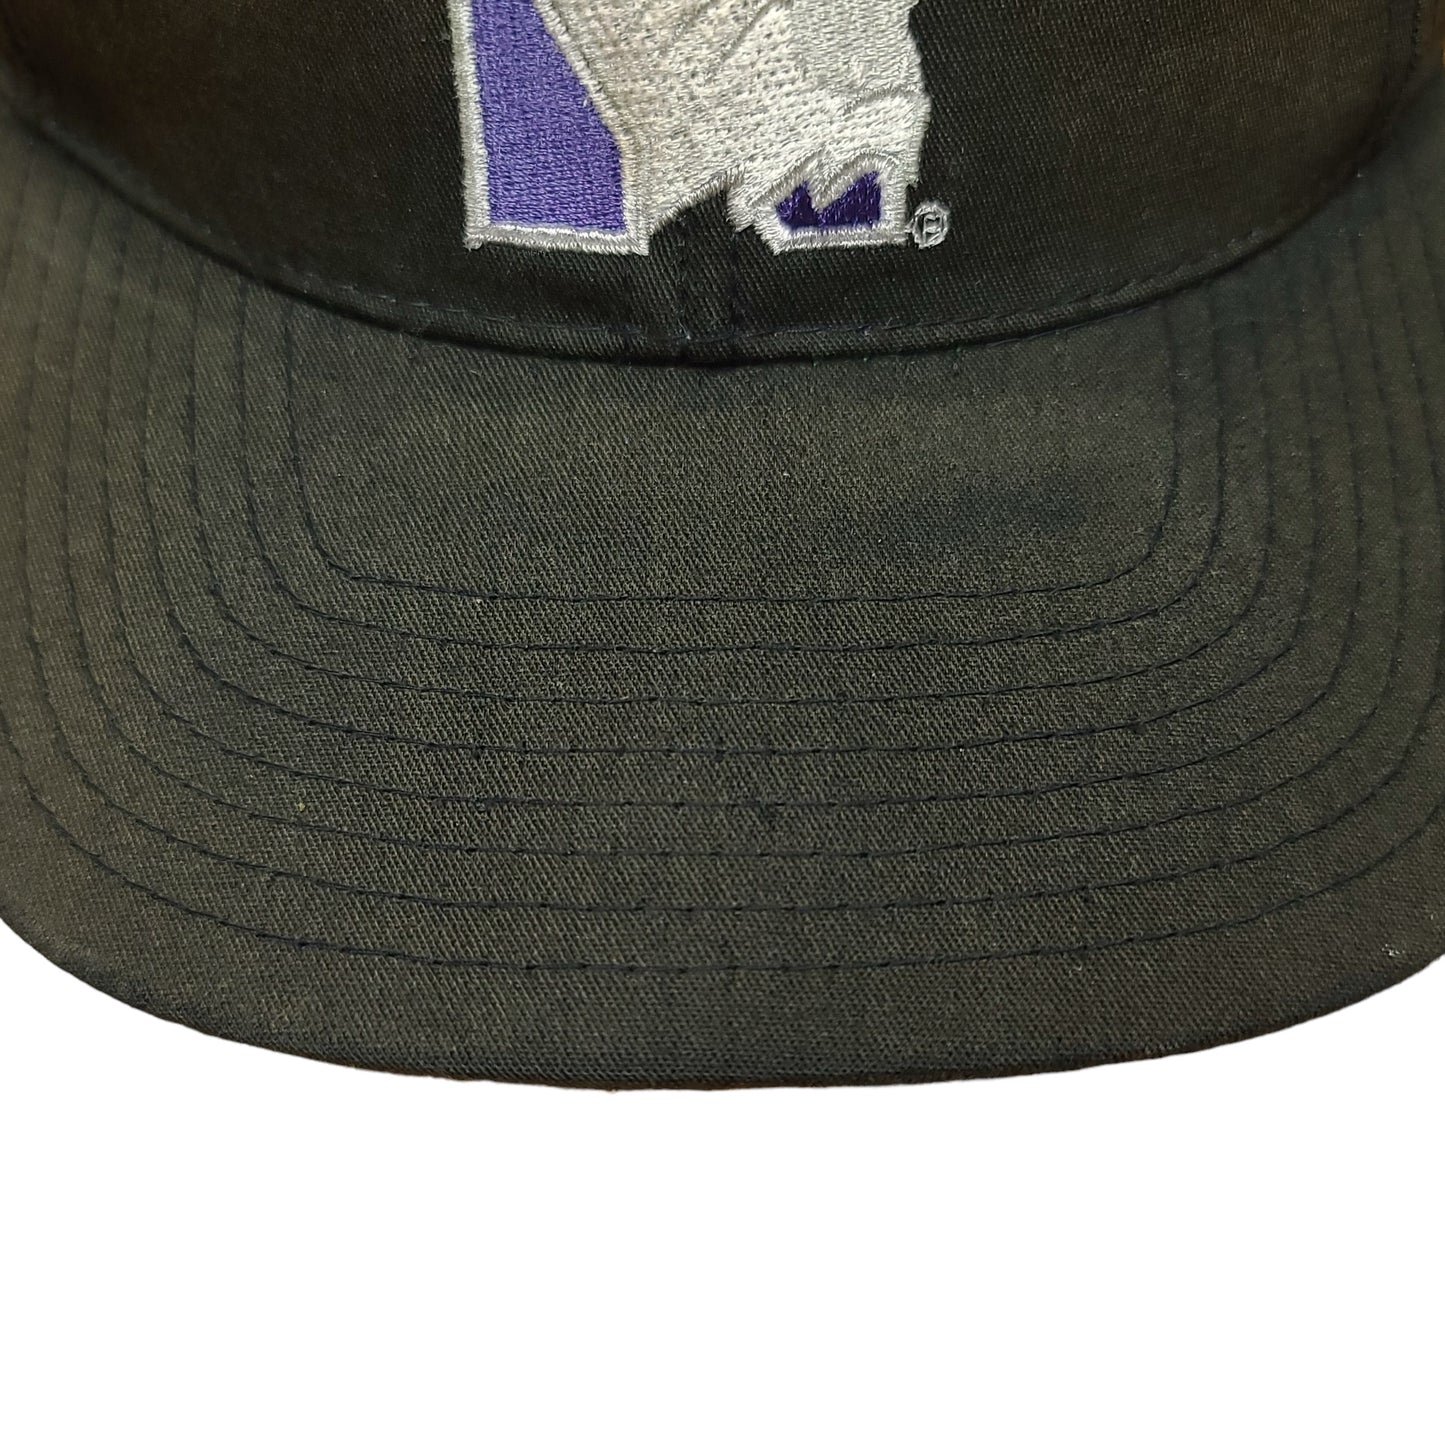 Vintage Northwestern University Faded Black Snap Back Hat